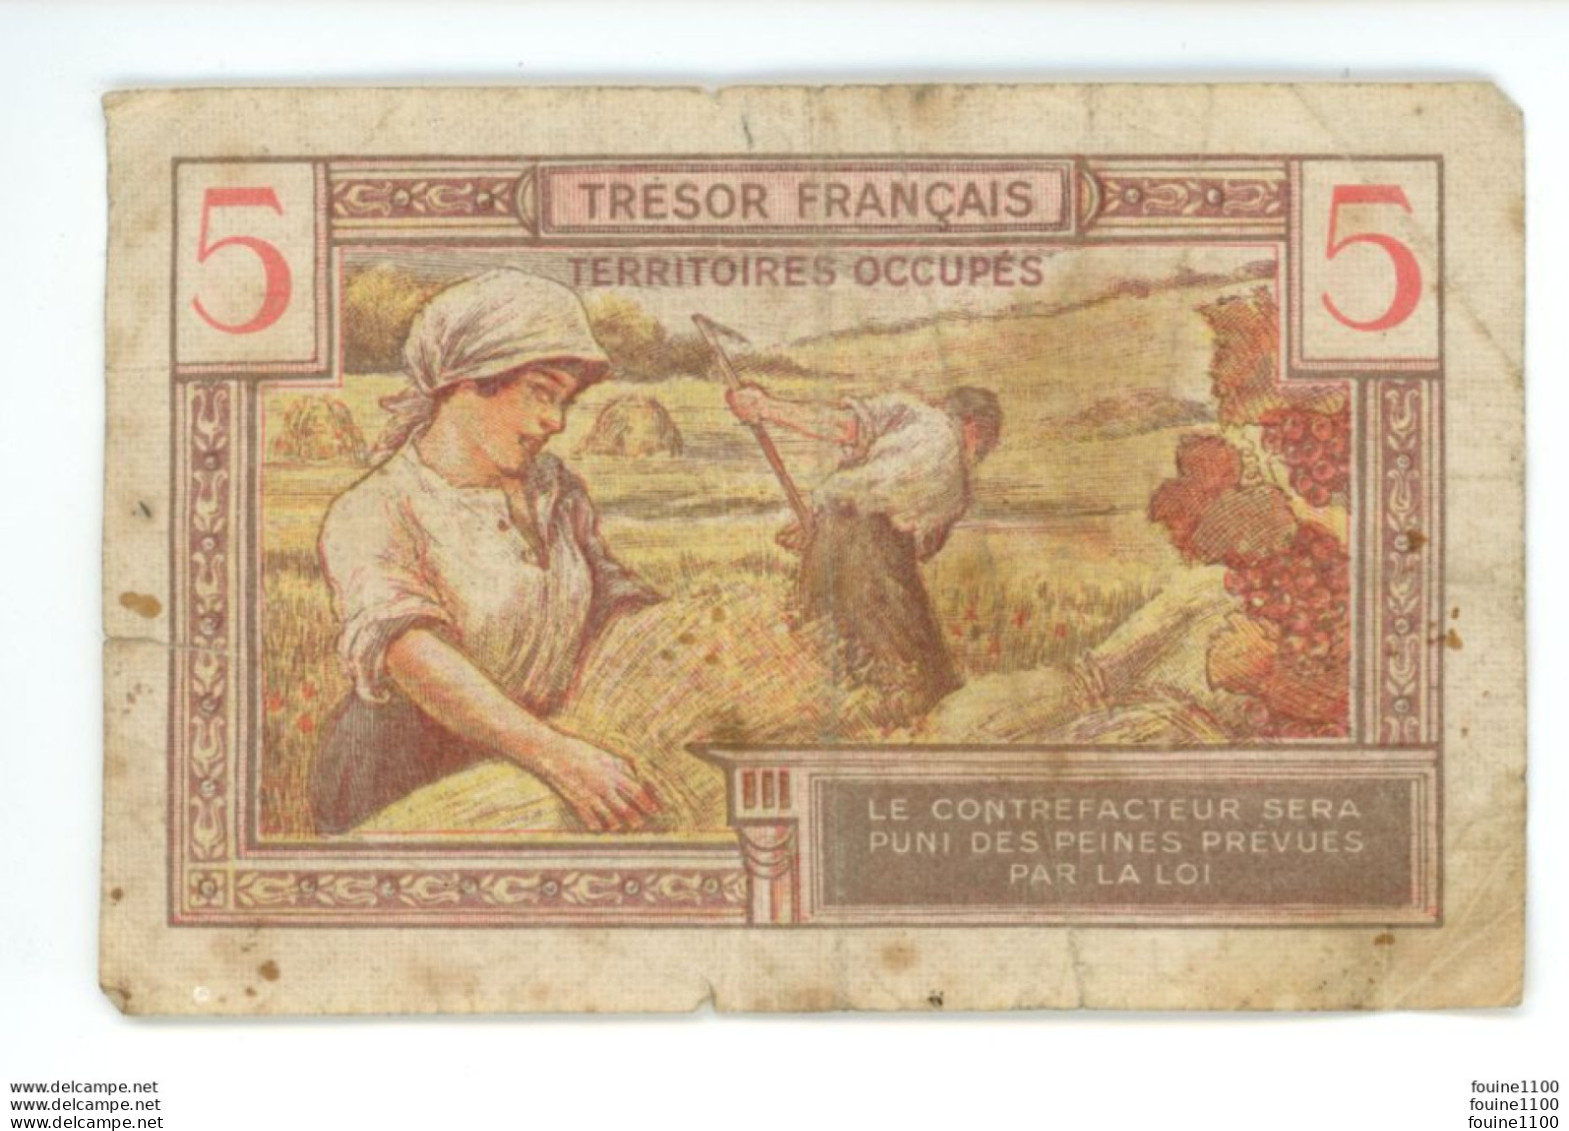 Billet , FRANCE , 5 Francs , Cinq , TRESOR FRANCAIS , Territoires Occupés - 1947 Franse Schatkist